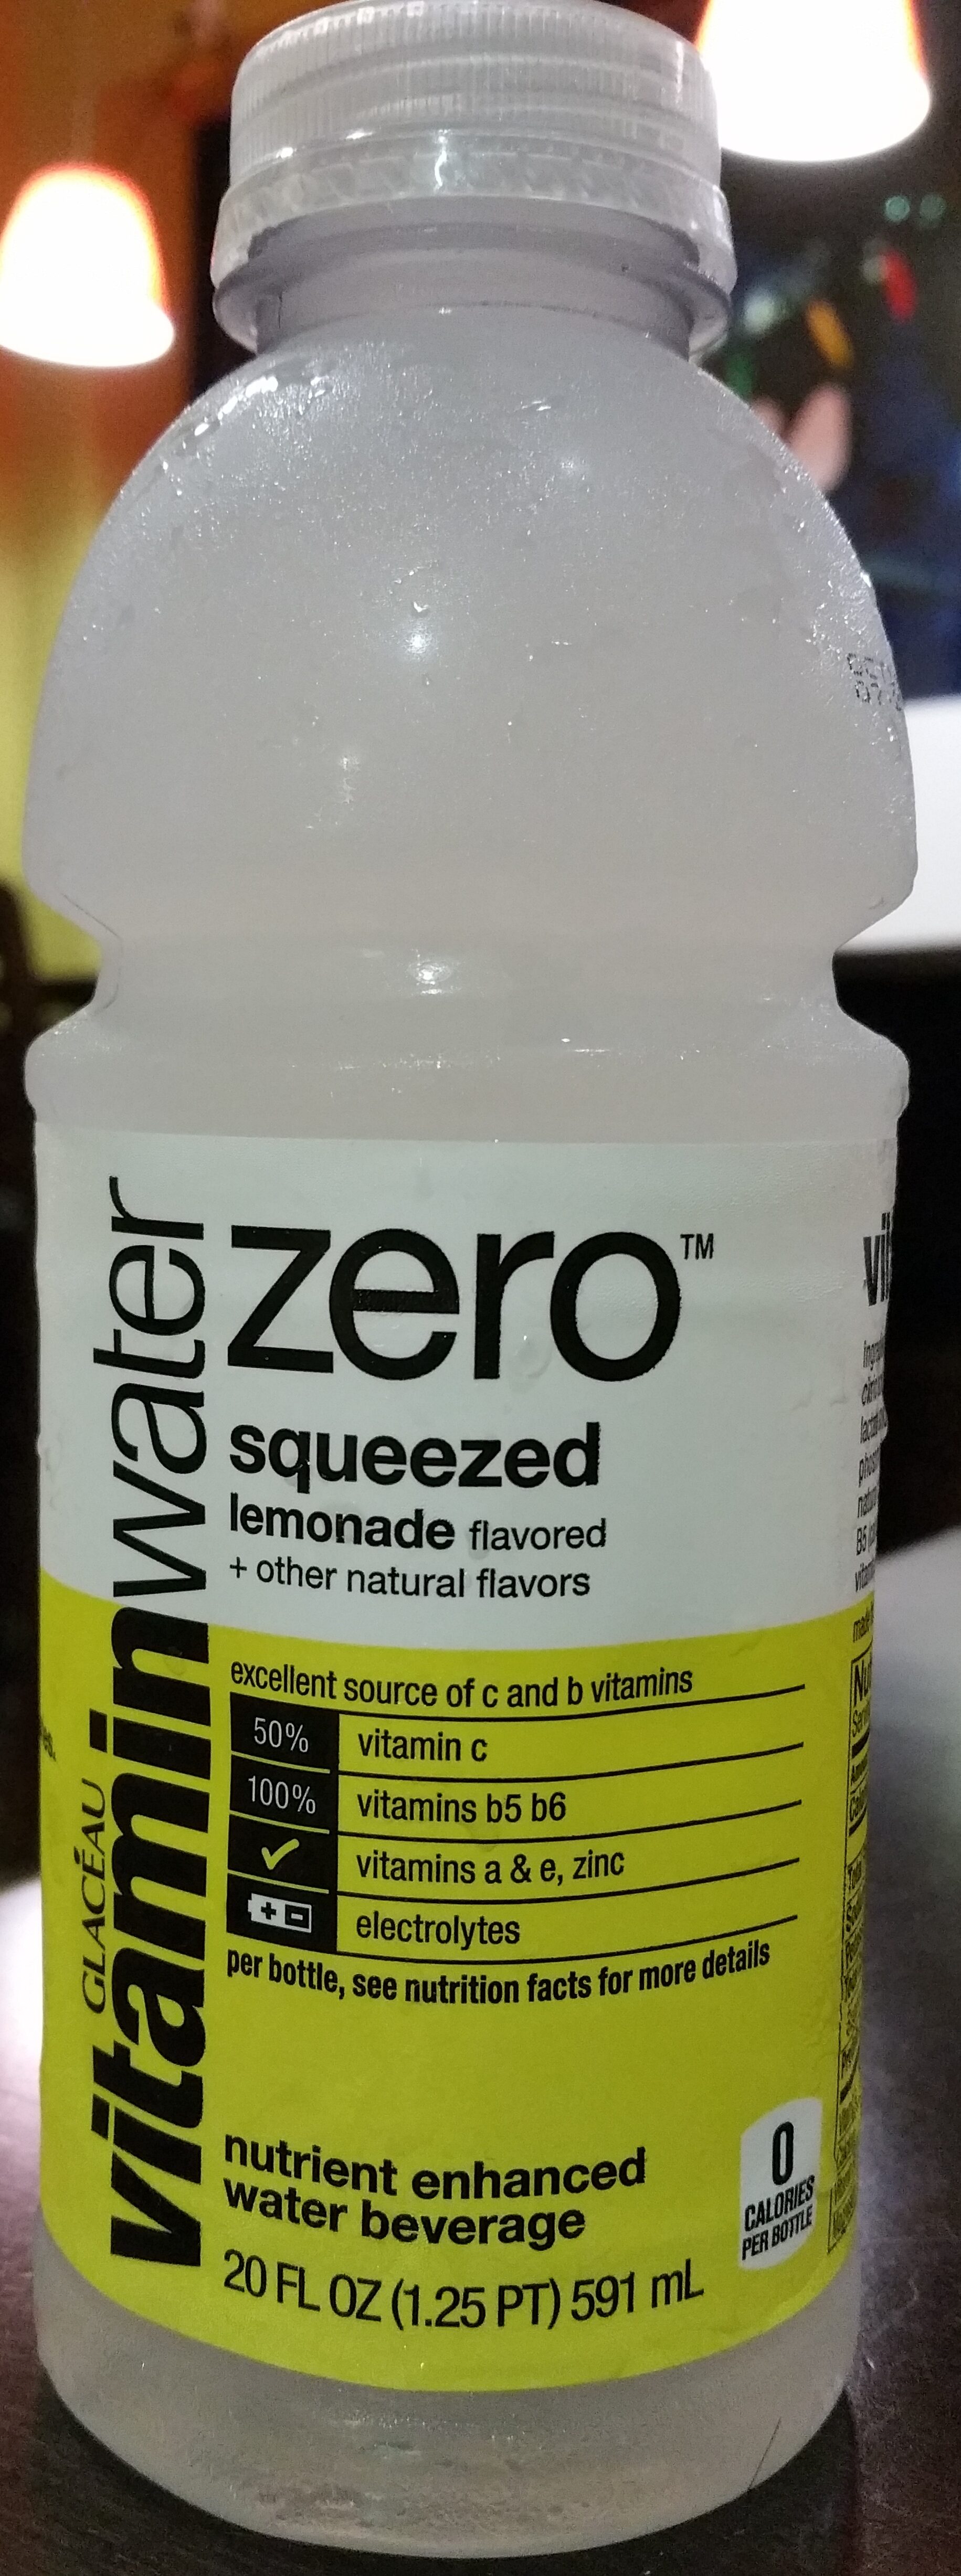 Vitamin water, vitaminwater zero squeezed, lemonade, lemonade - Product